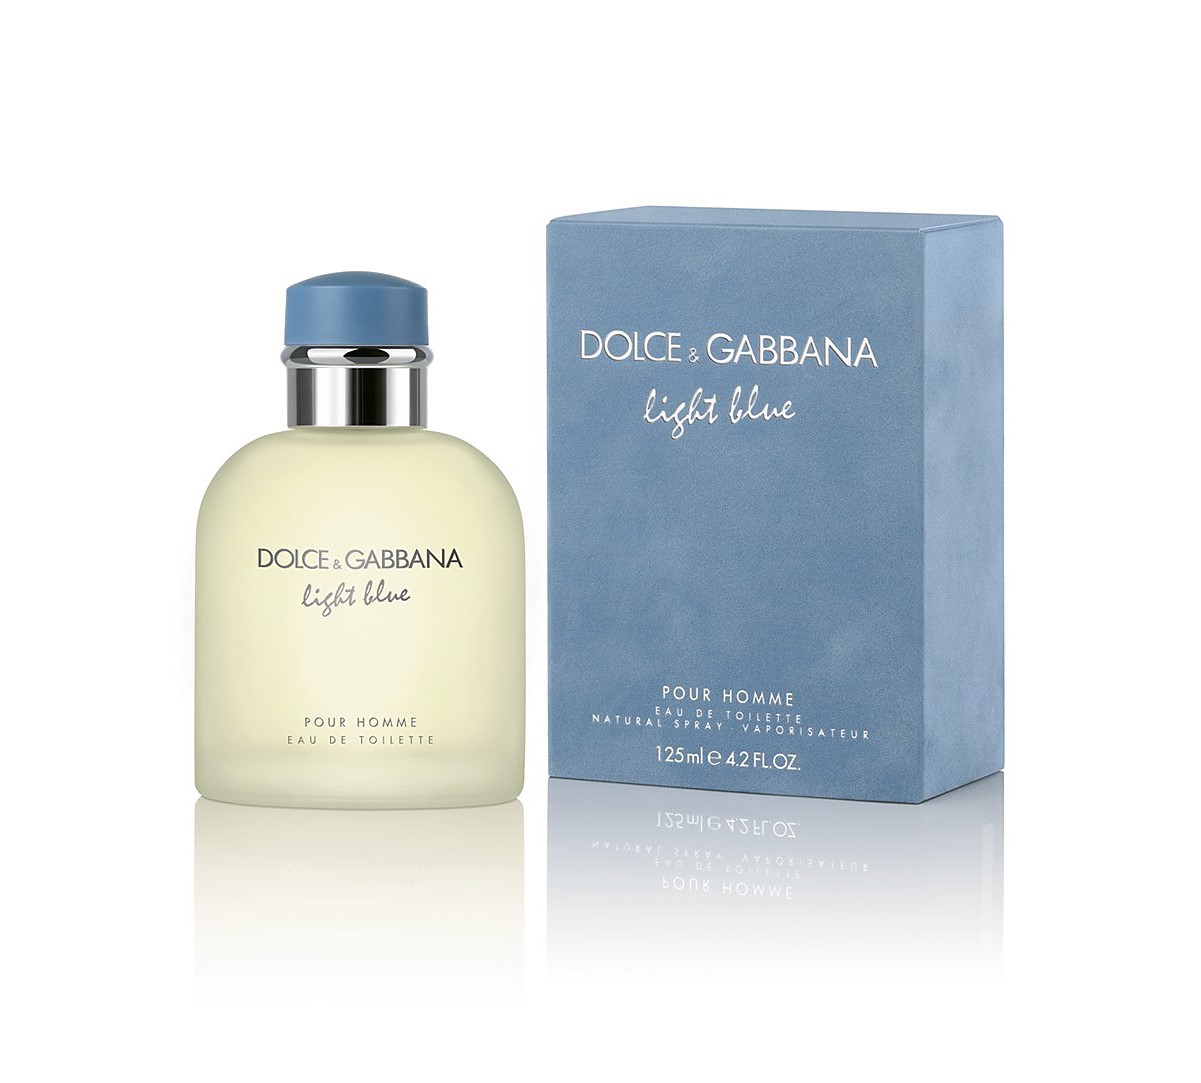 Купить Туалетная вода Dolce & Gabbana, Dolce & Gabbana Light Blue Pour Homme 125ml тестер, Италия